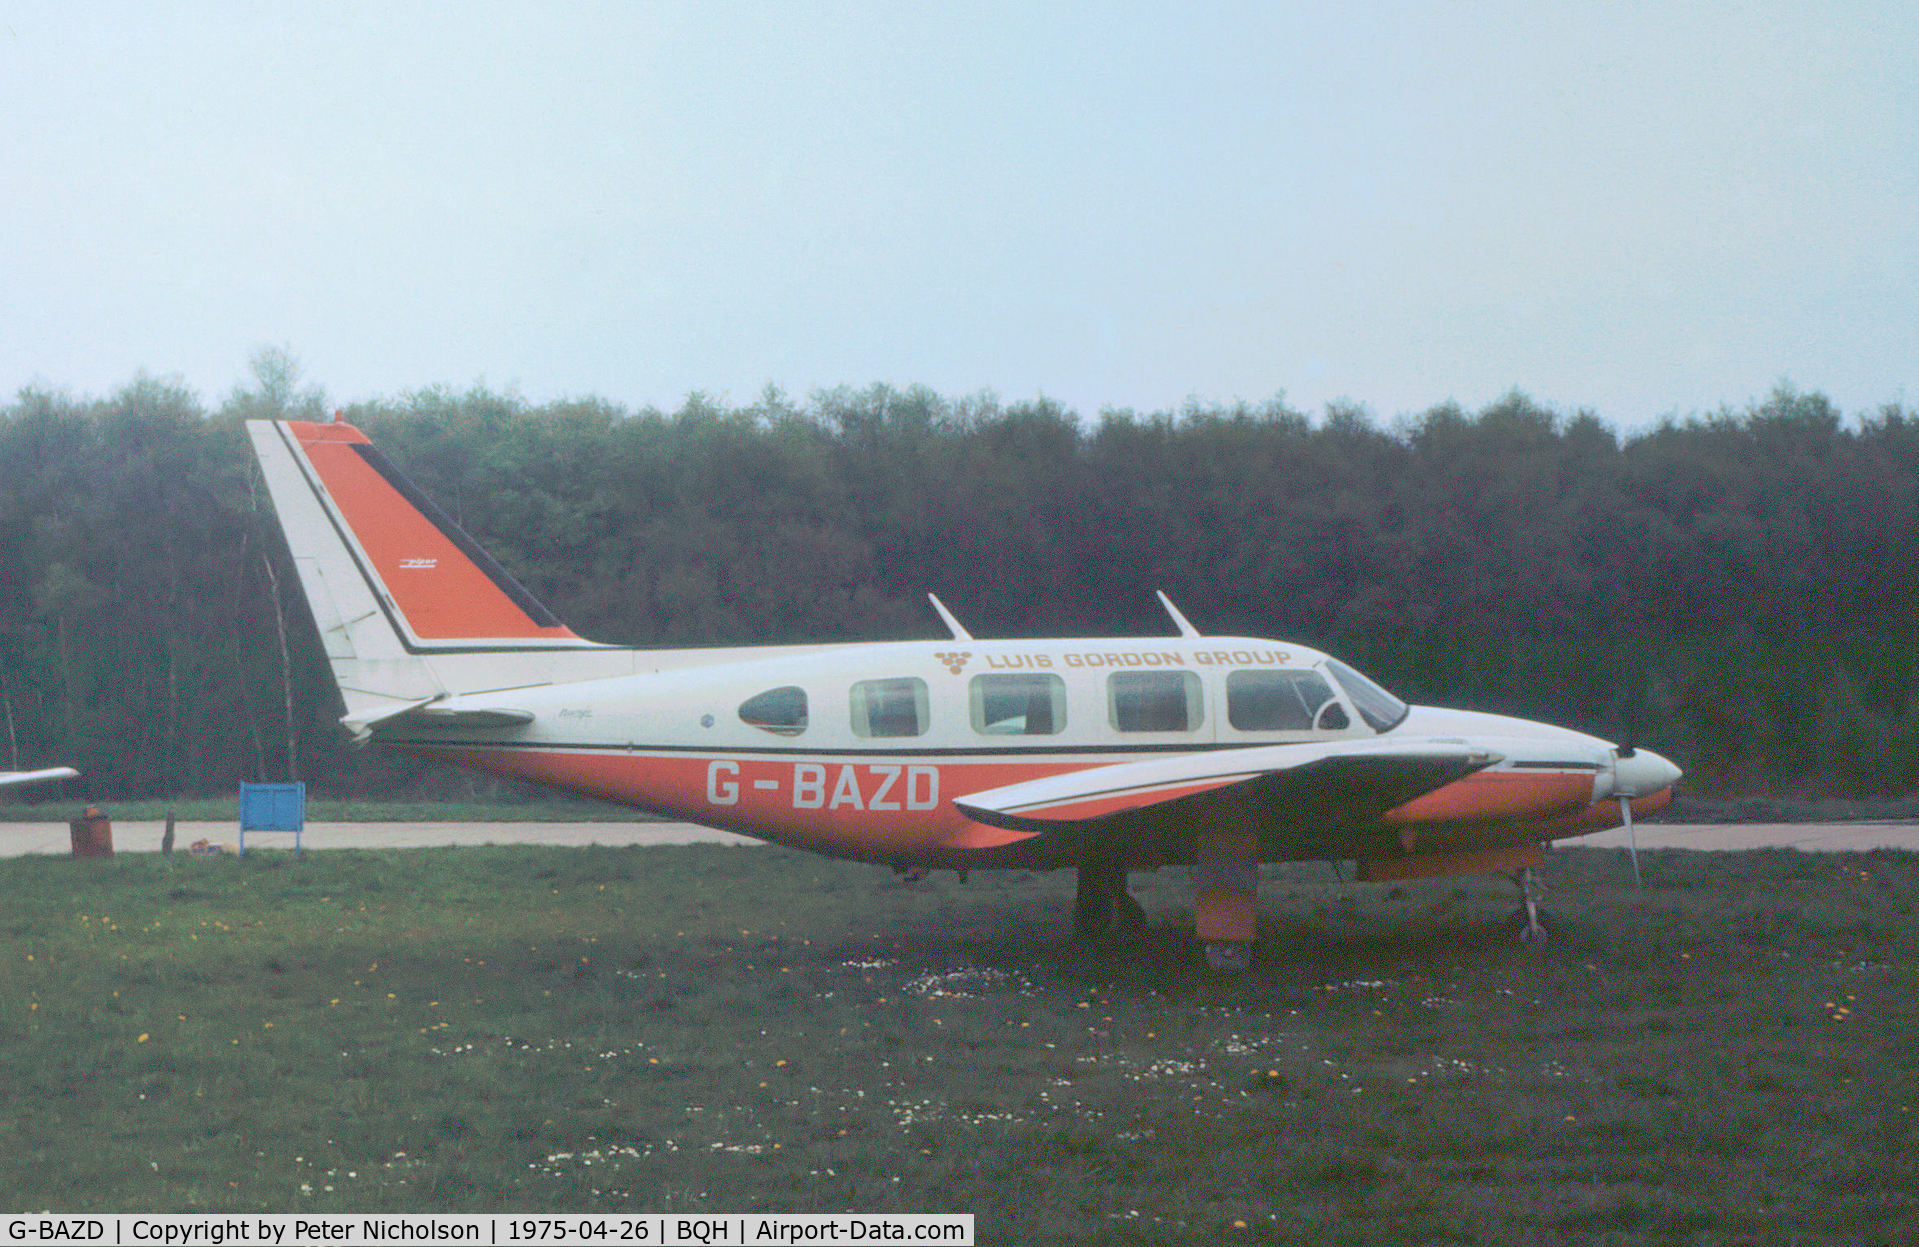 G-BAZD, 1973 Piper PA-31 Navajo C/N 31-7300915, PA-31 Navajo of the Luis Gordon Group resident at Biggin Hill in April 1975.